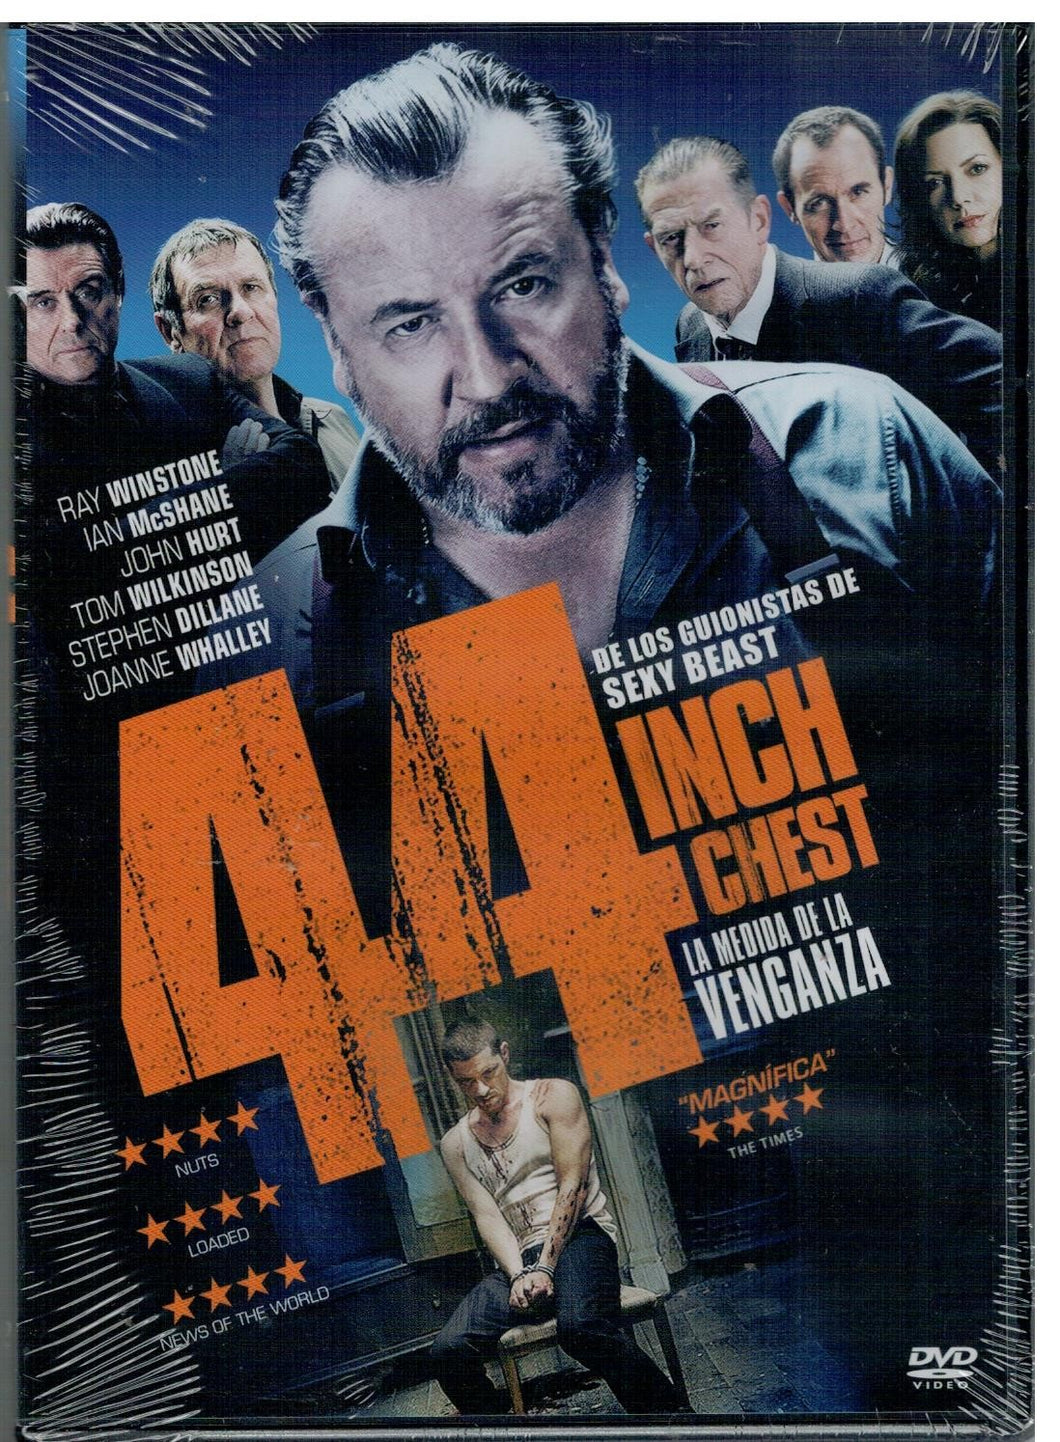 44 Inch Chest (La medida de la venganza) (DVD Nuevo)